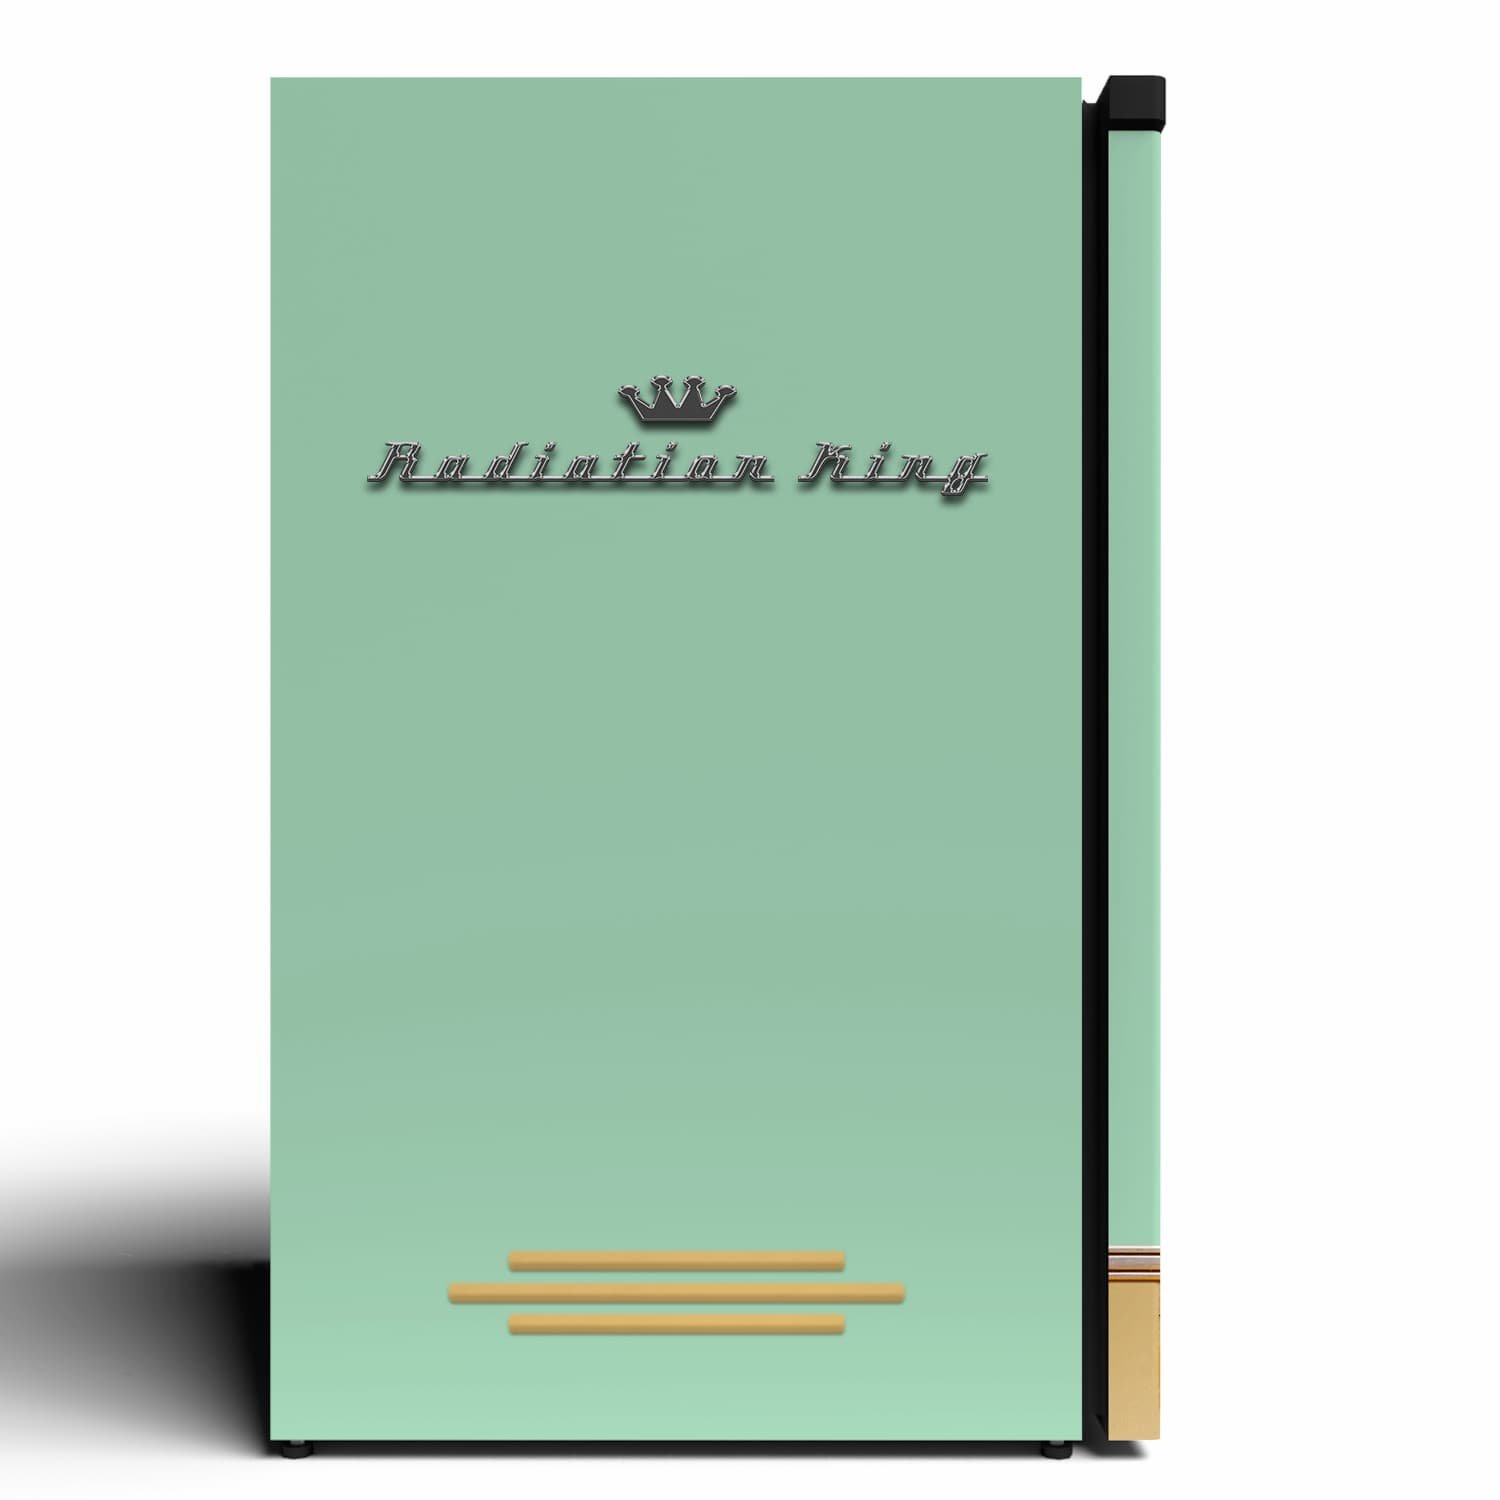 Radiation King Retro TV mini fridge wrap